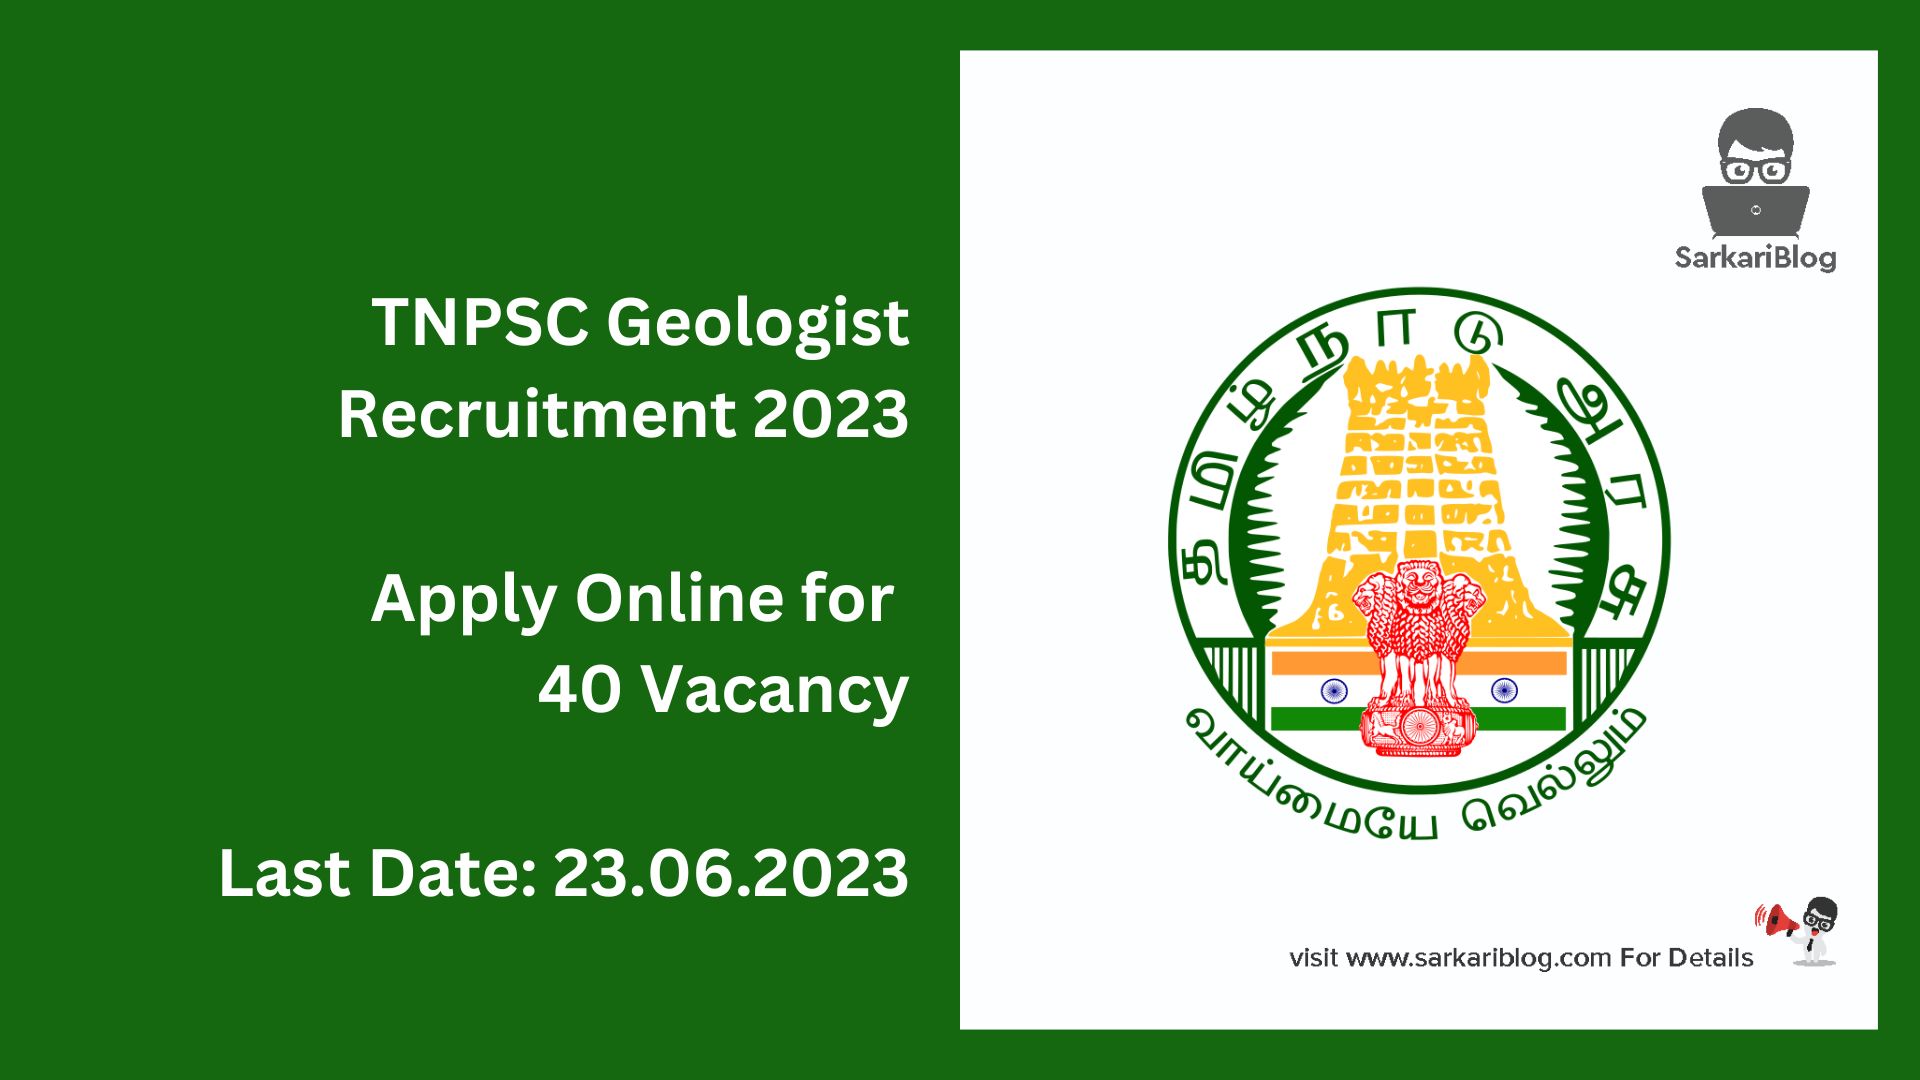 TNPSC Geologist Recruitment 2023